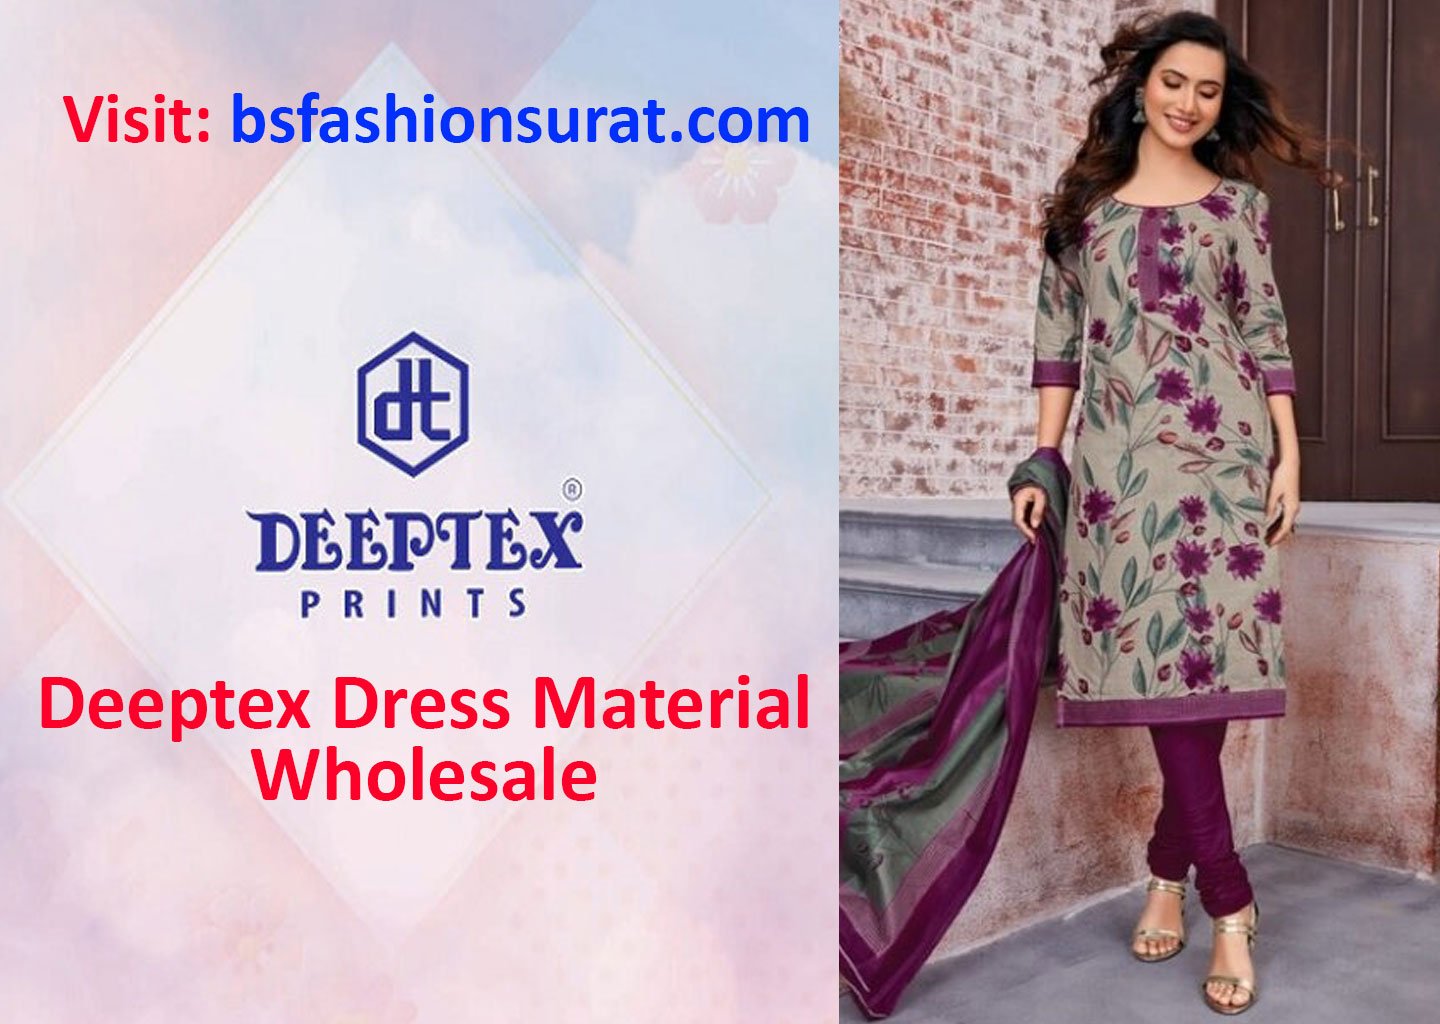 Deeptex Dress Material Wholesale